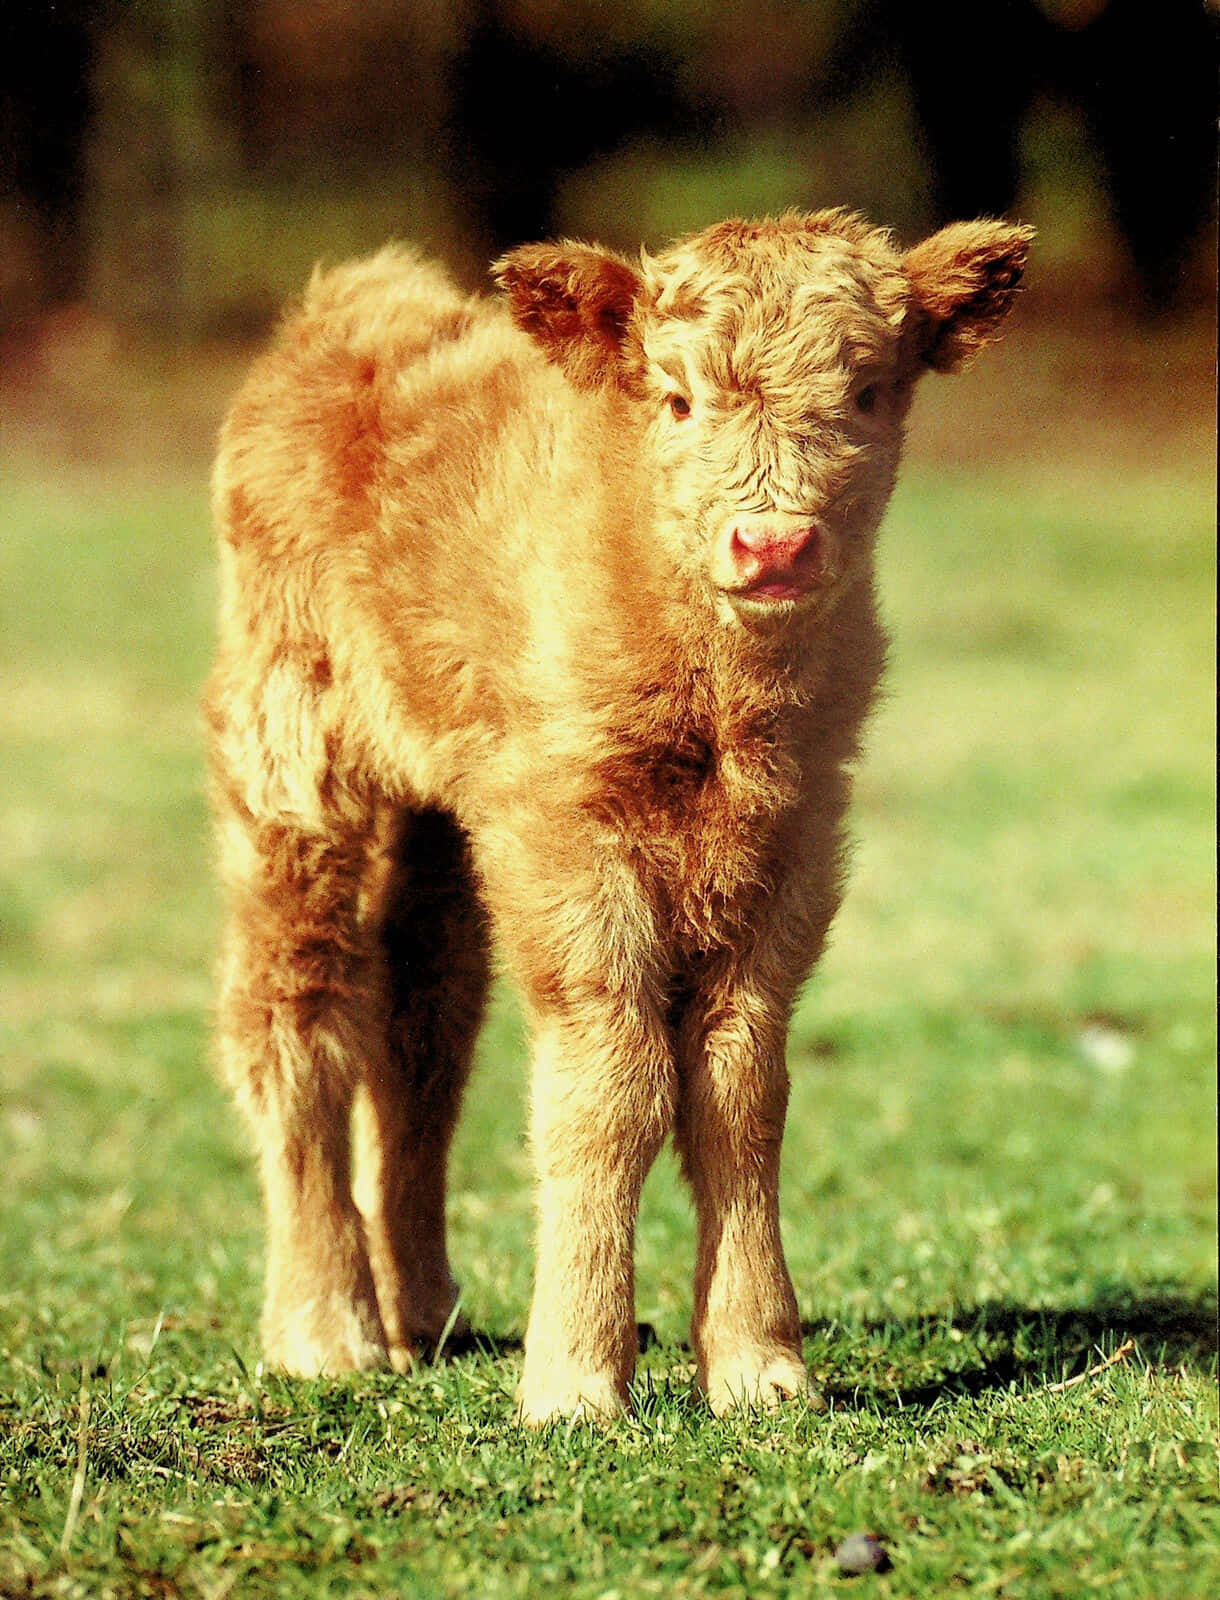 Adorable Brown Baby Cow Standing In Field.jpg Wallpaper